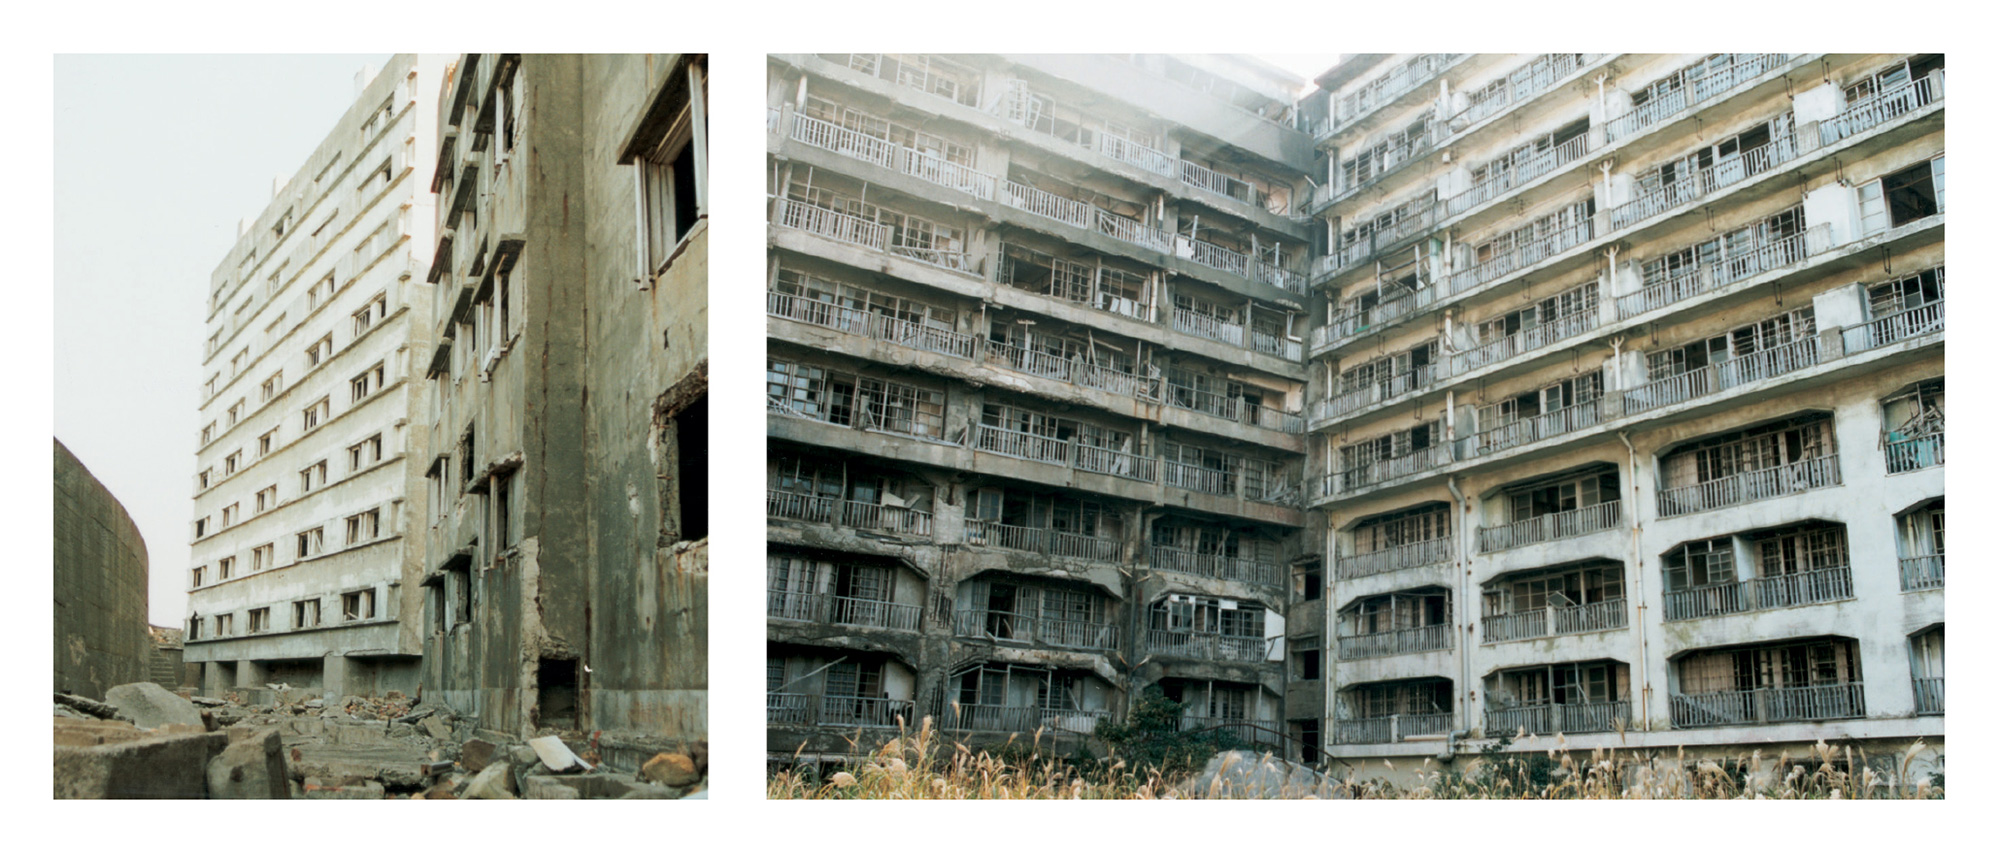 Residential apartments on Hashima. Photos Carl Michael von Hausswolff, 2001. 